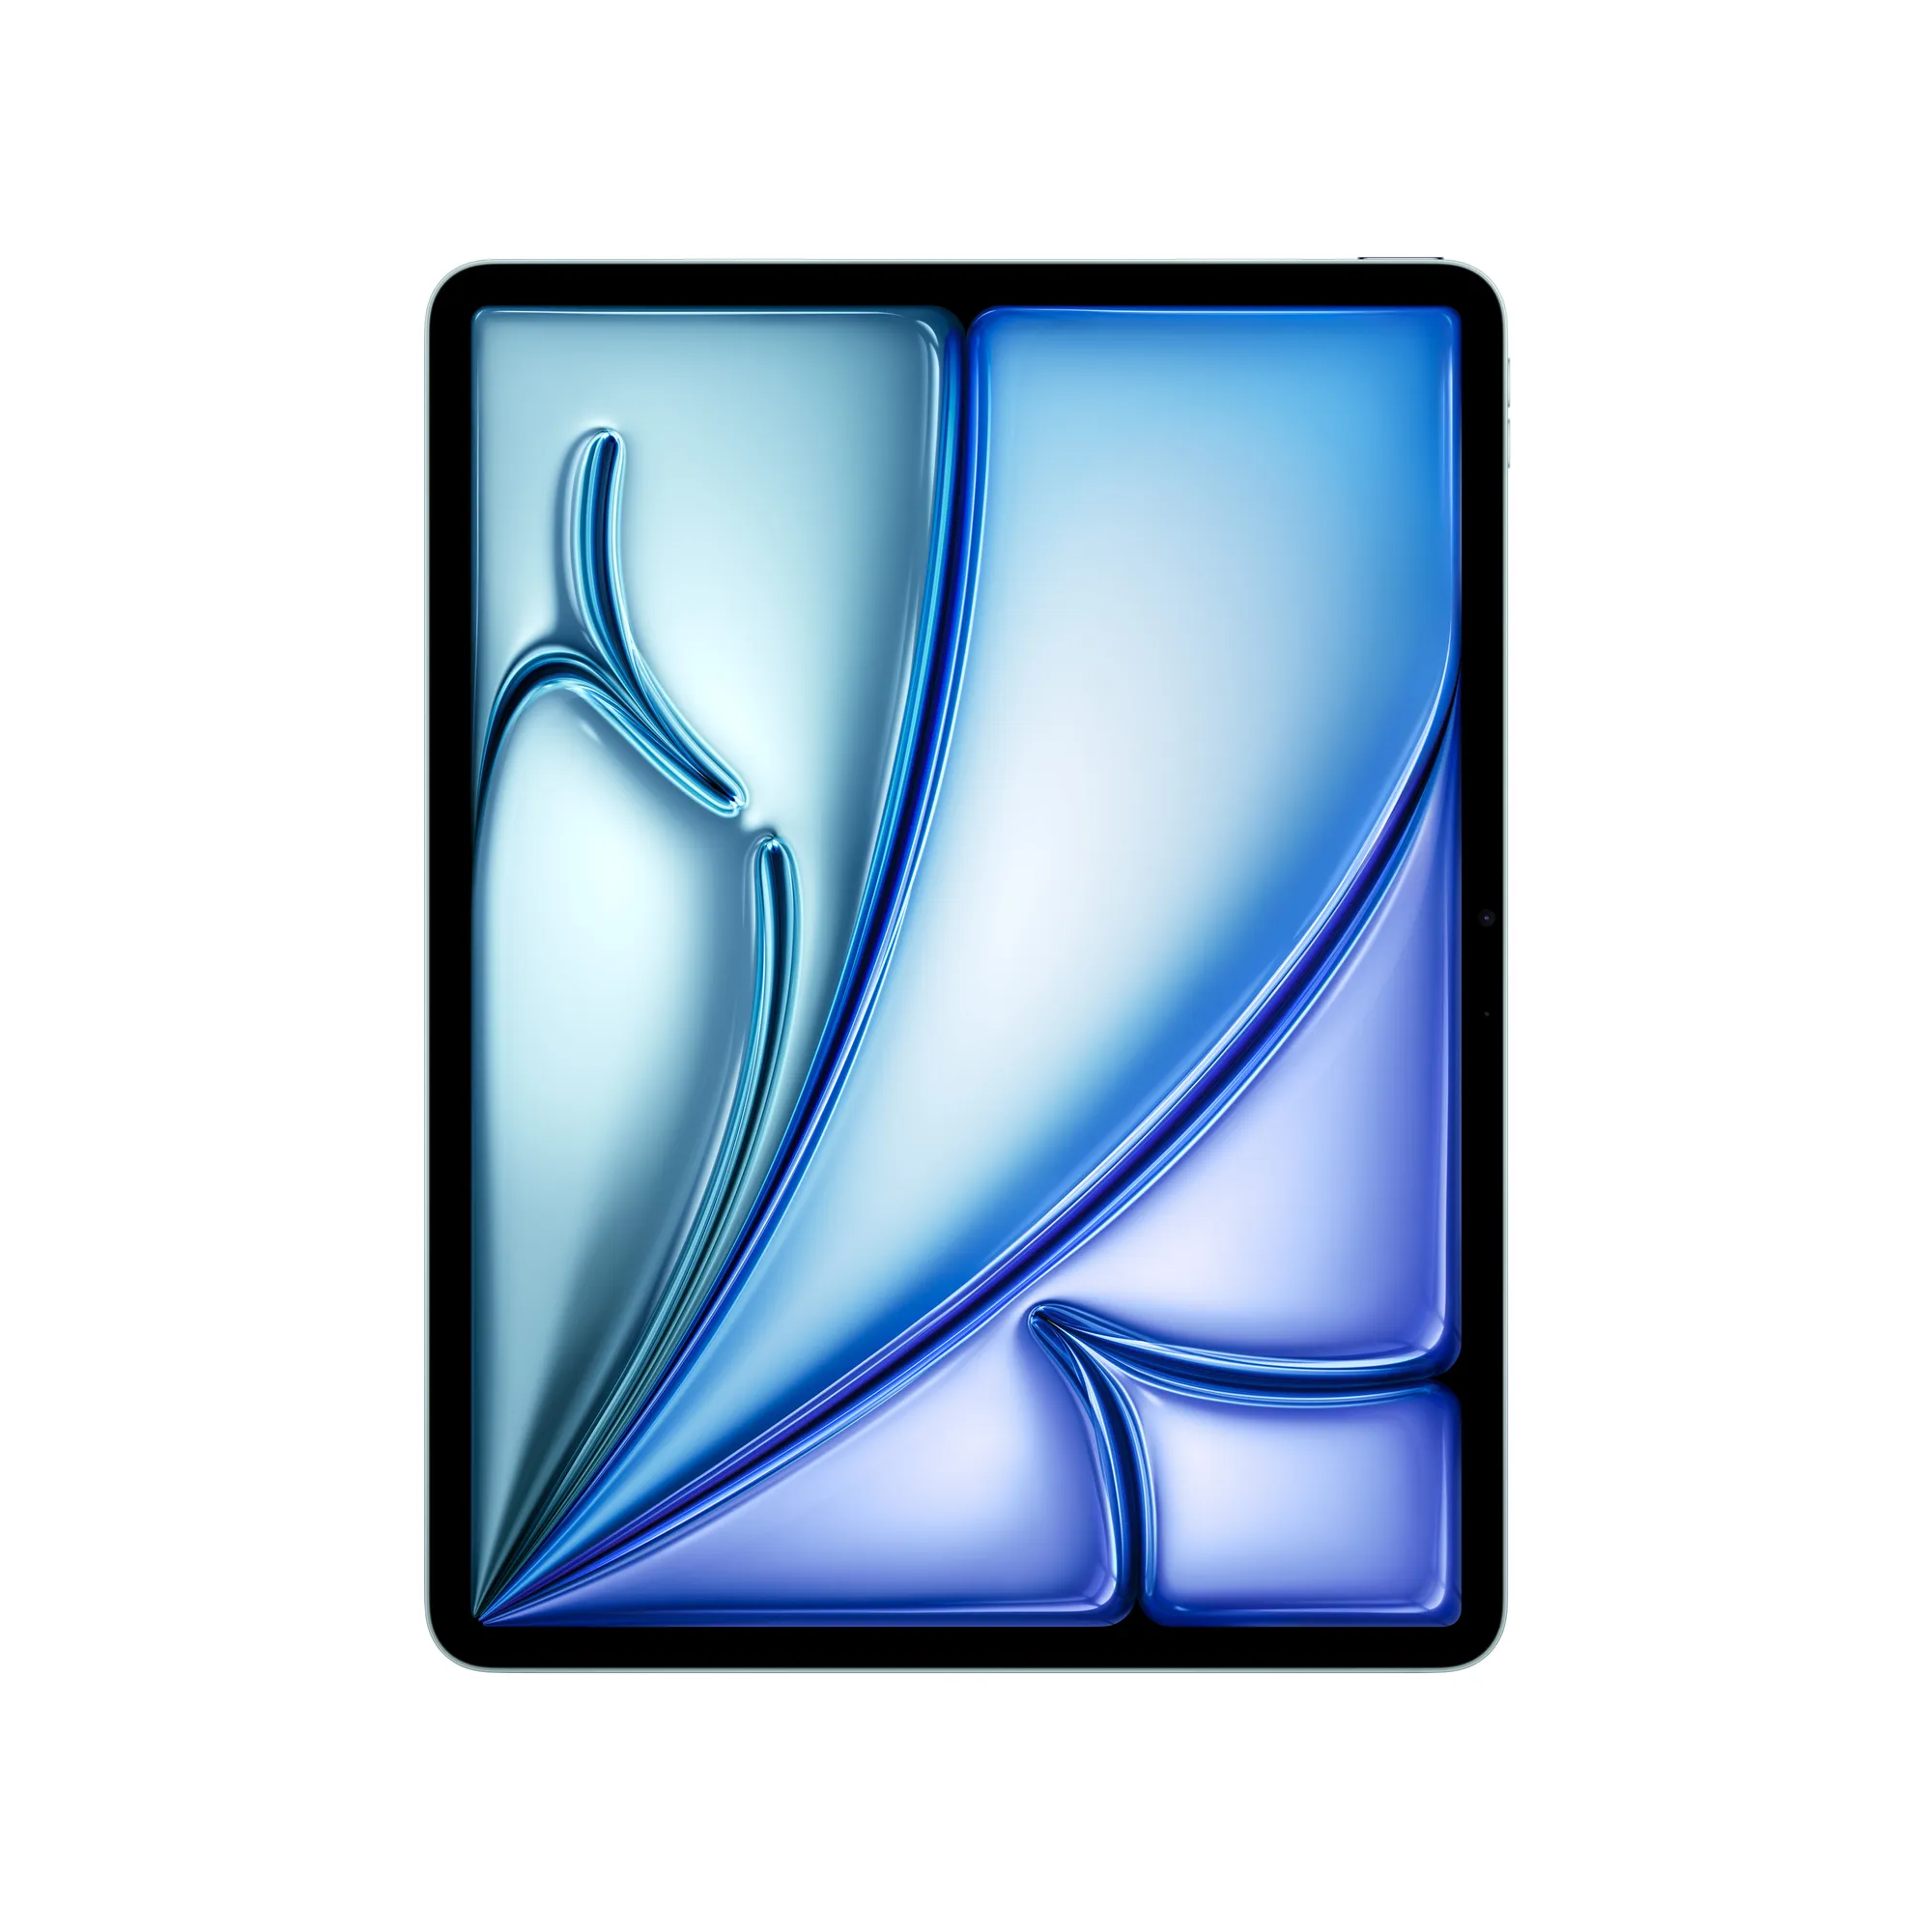 13 hüvelykes iPad Air, Wi-Fi, 512 GB – kék